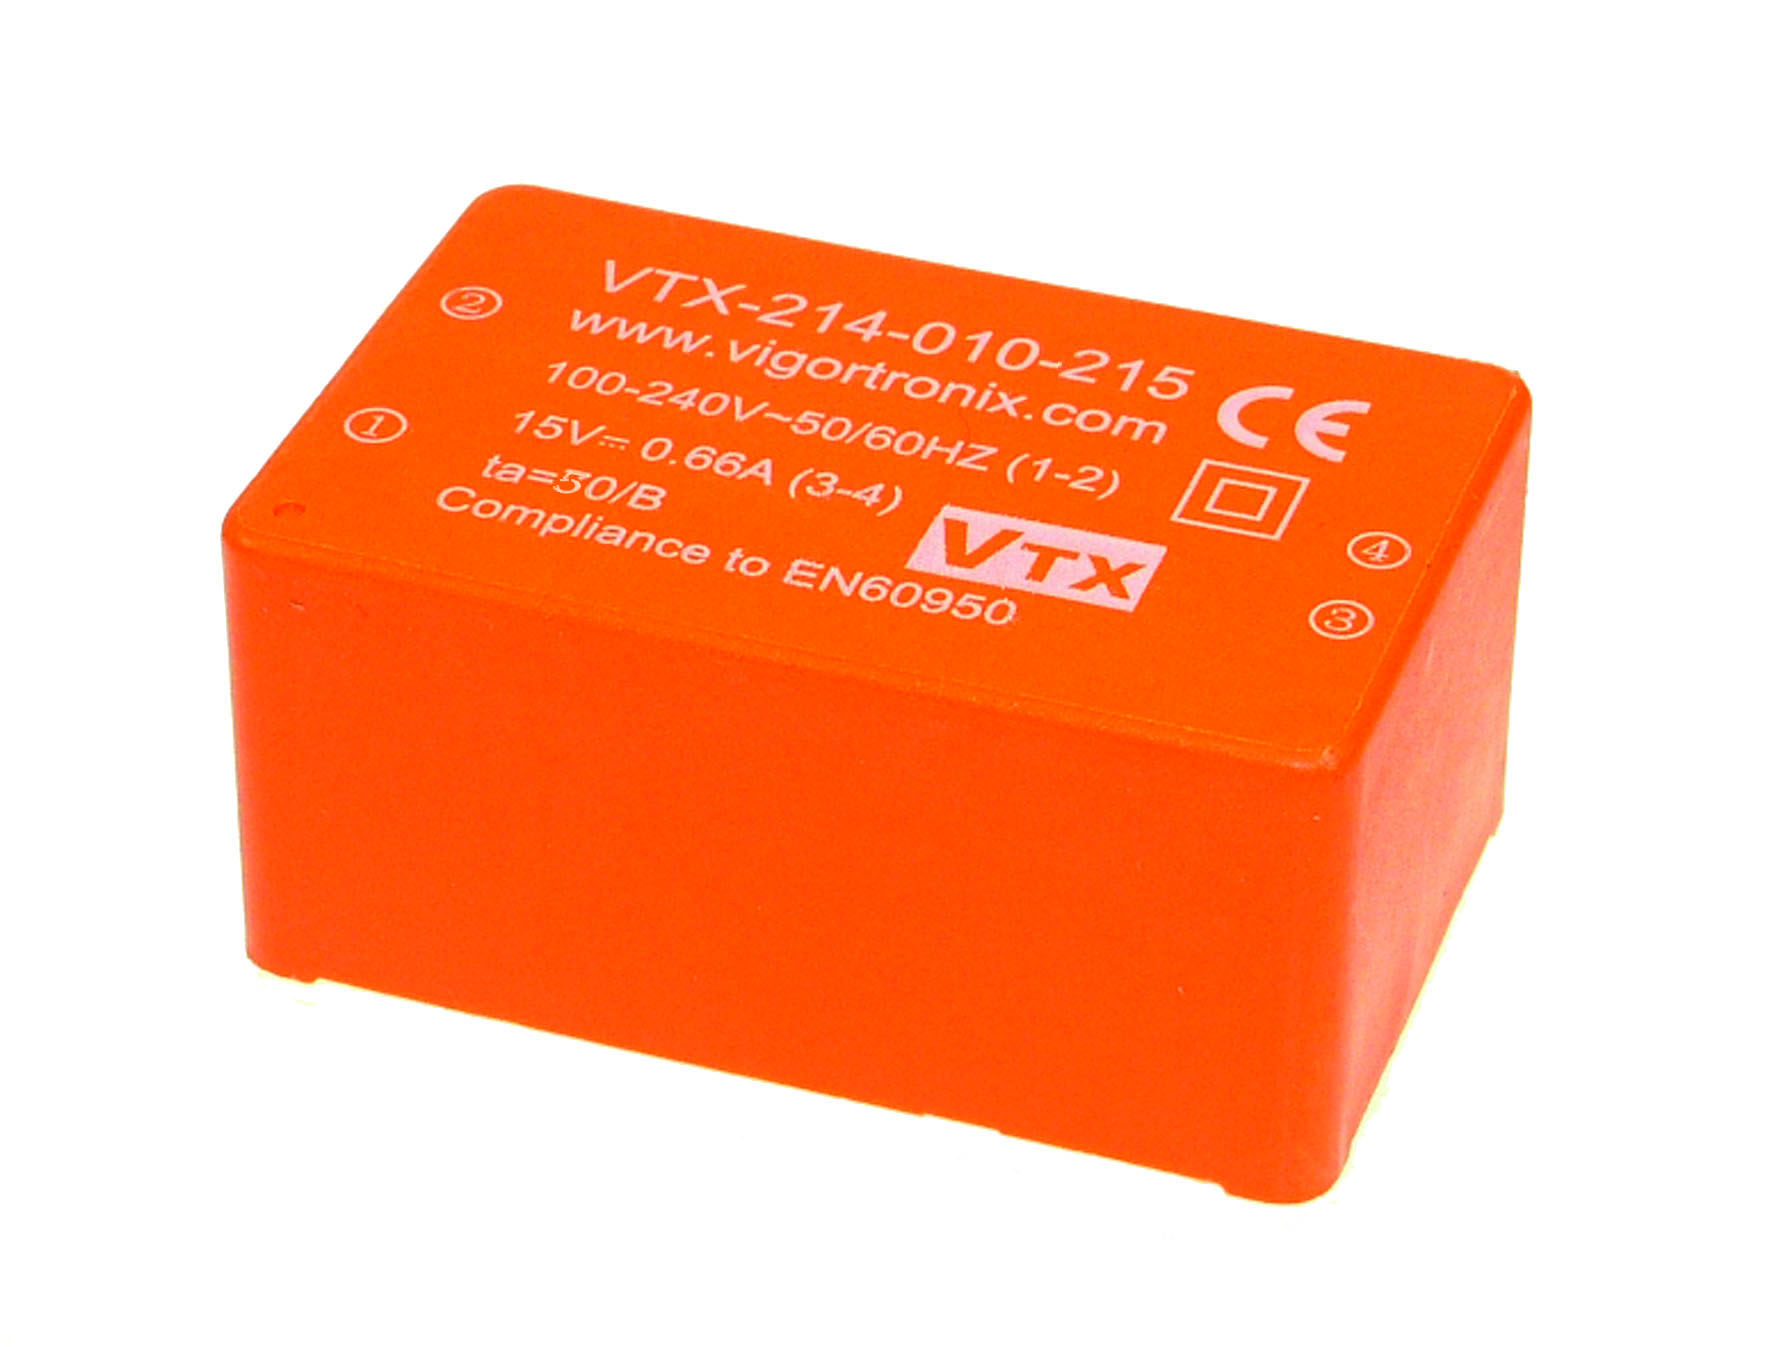 Vigortronix VTX-214-010-2 AC-DC Converter 10 Watt